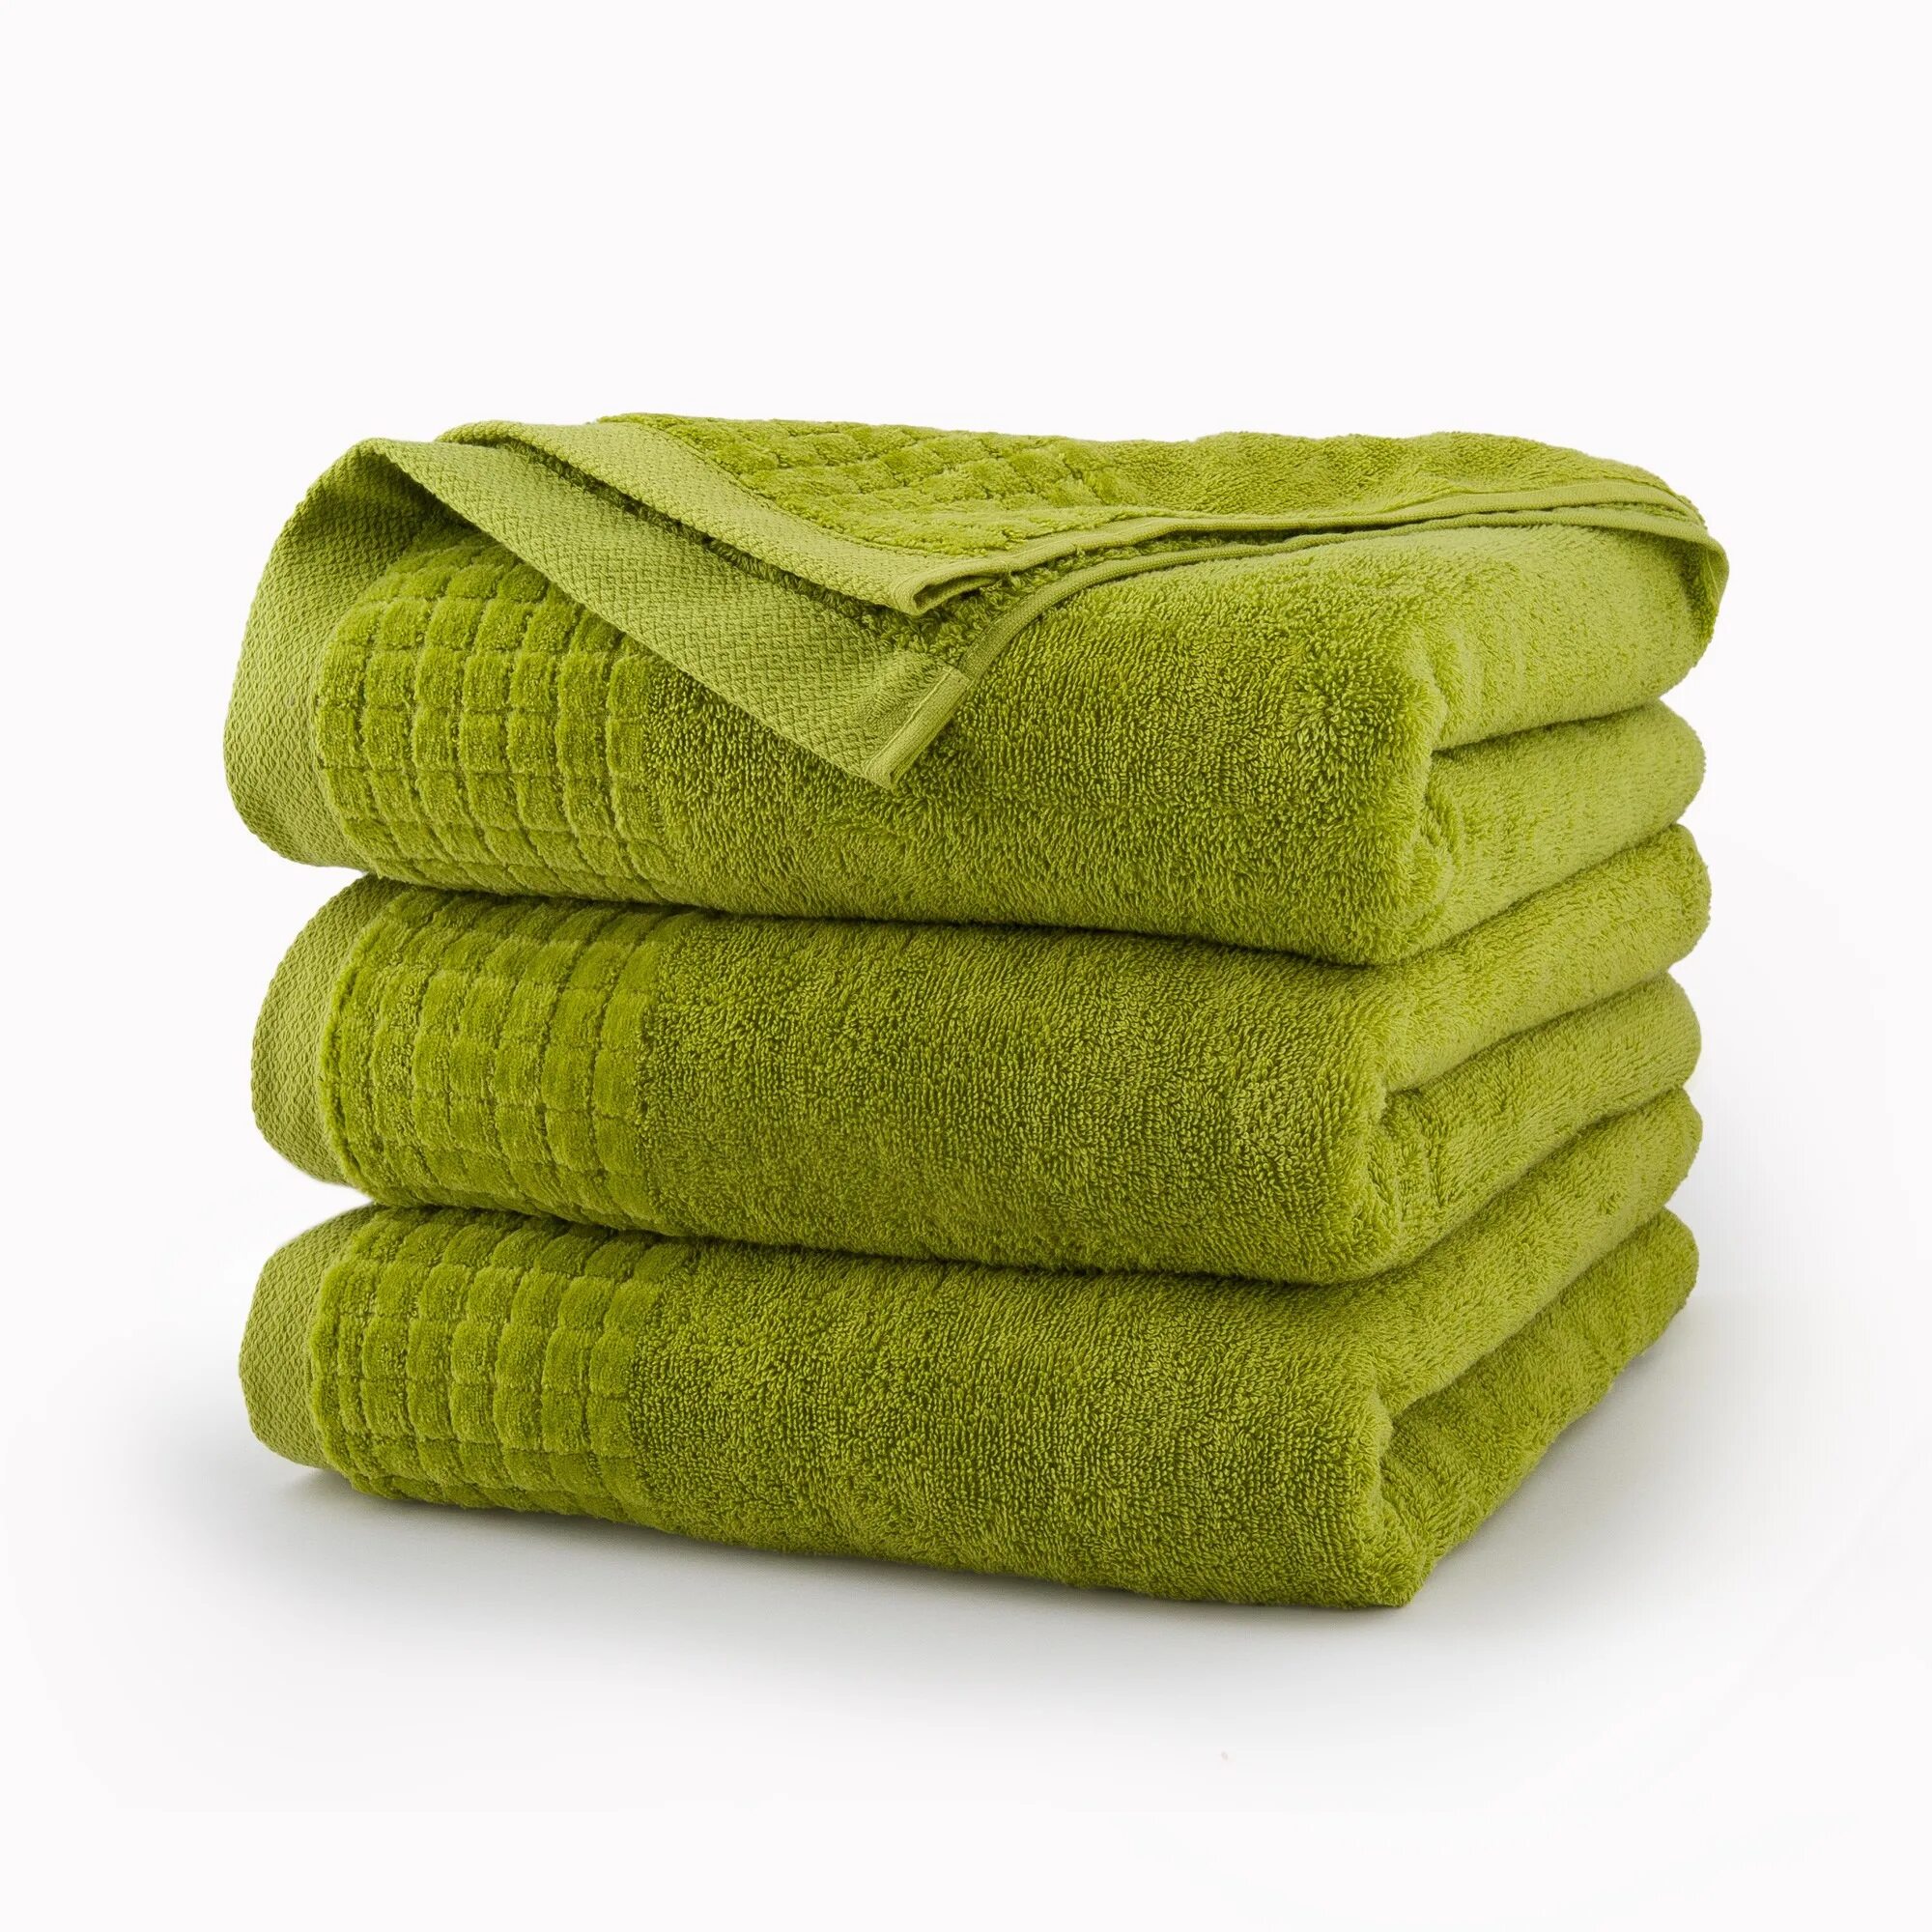 Полотенце верхнее. Салатовое полотенце. Зеленое полотенце. Полотенце махровое зеленый. Сложенные полотенца.